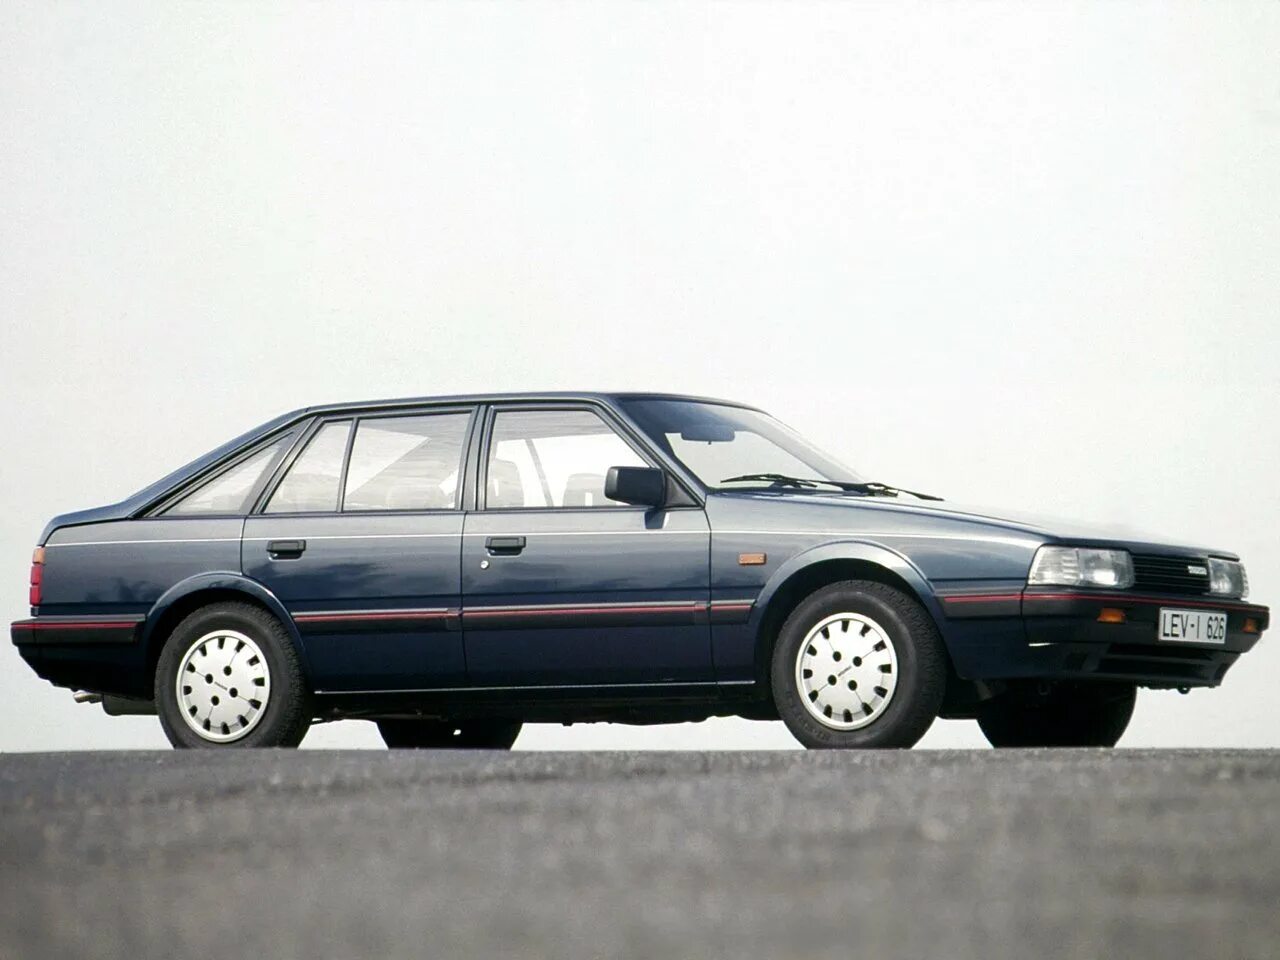 Mazda 626 Hatchback. Mazda 626 II (GC). Mazda 626 1987 хэтчбек. Mazda 626 1987 2.0 седан. Мазда 626 хэтчбек